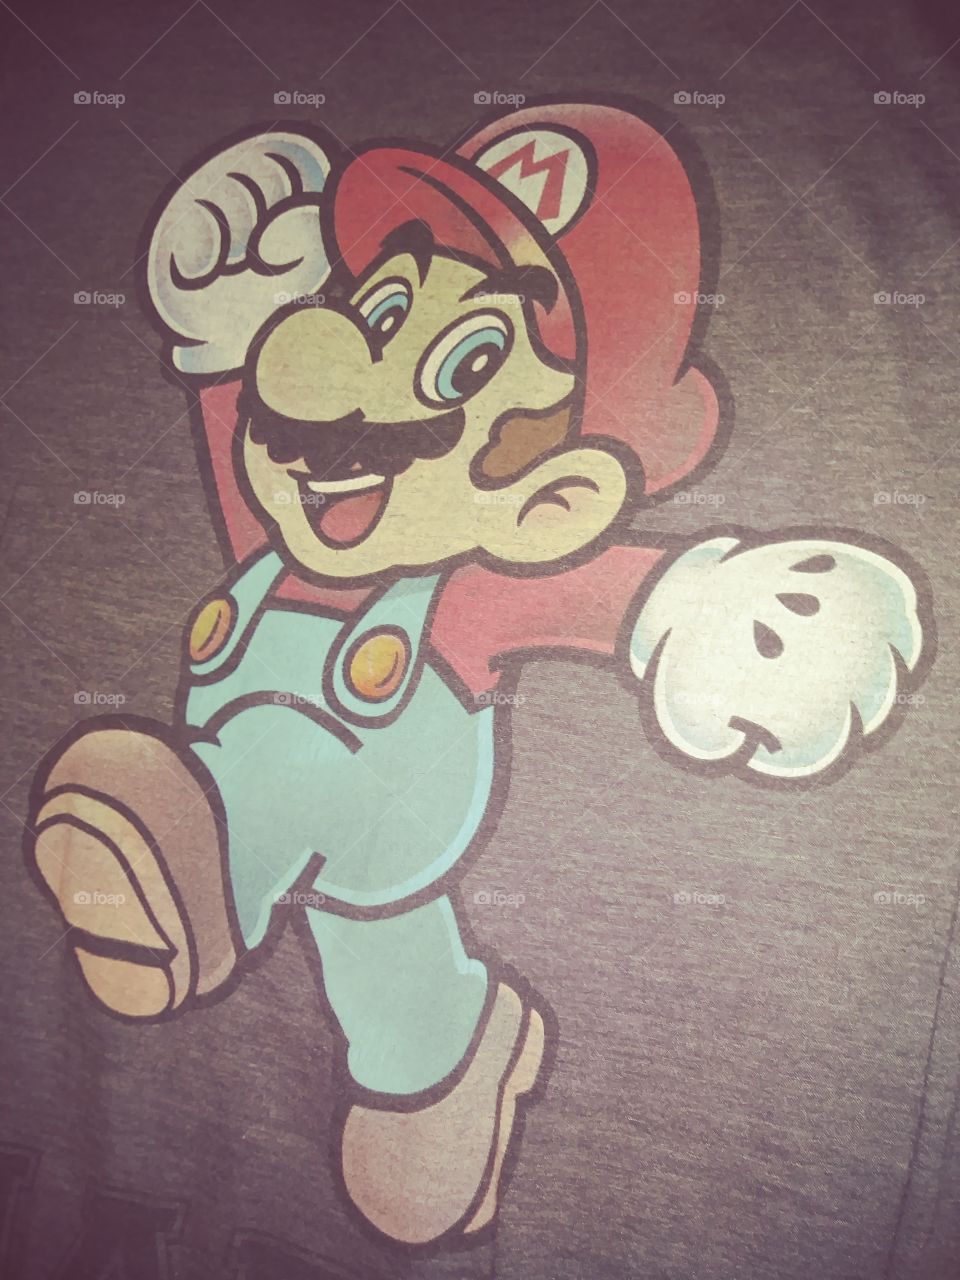 Itsa Mario!